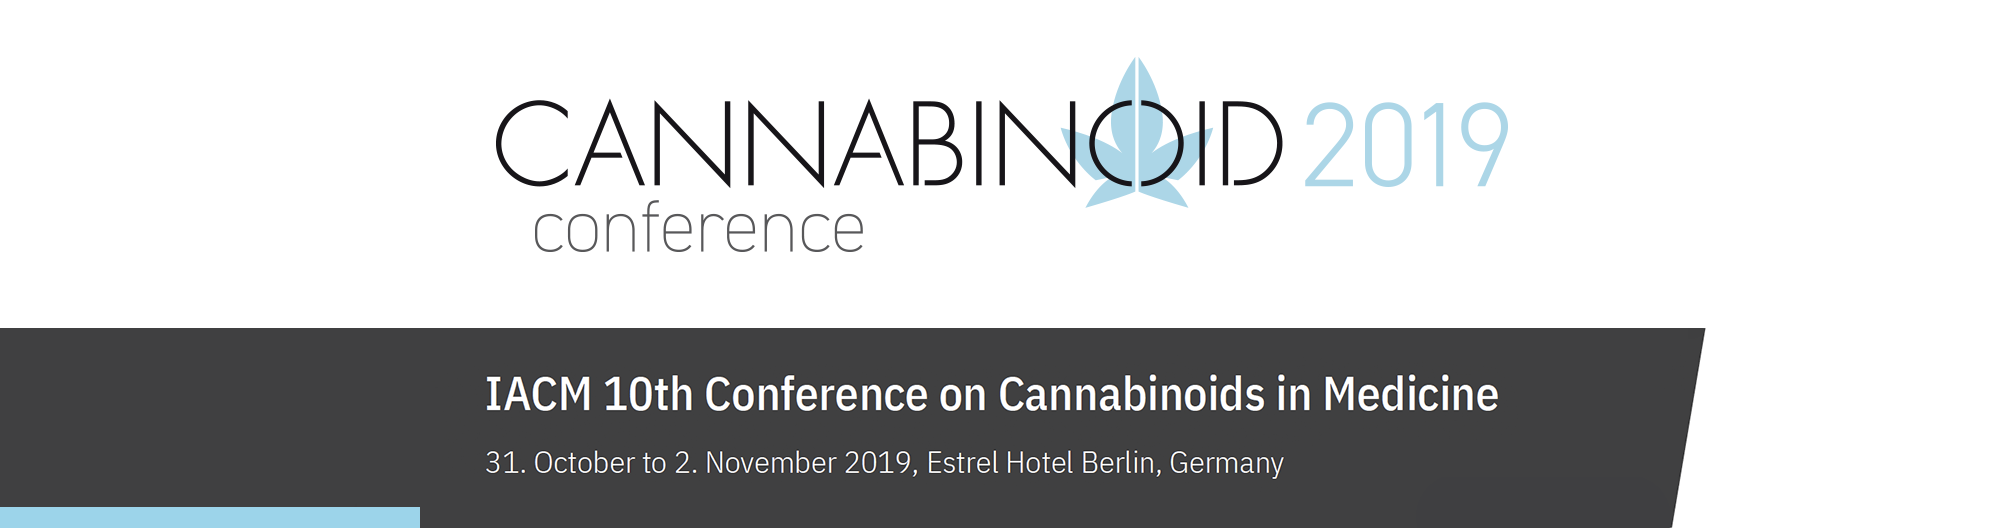 Logo - Cannabinoid Conference 2019